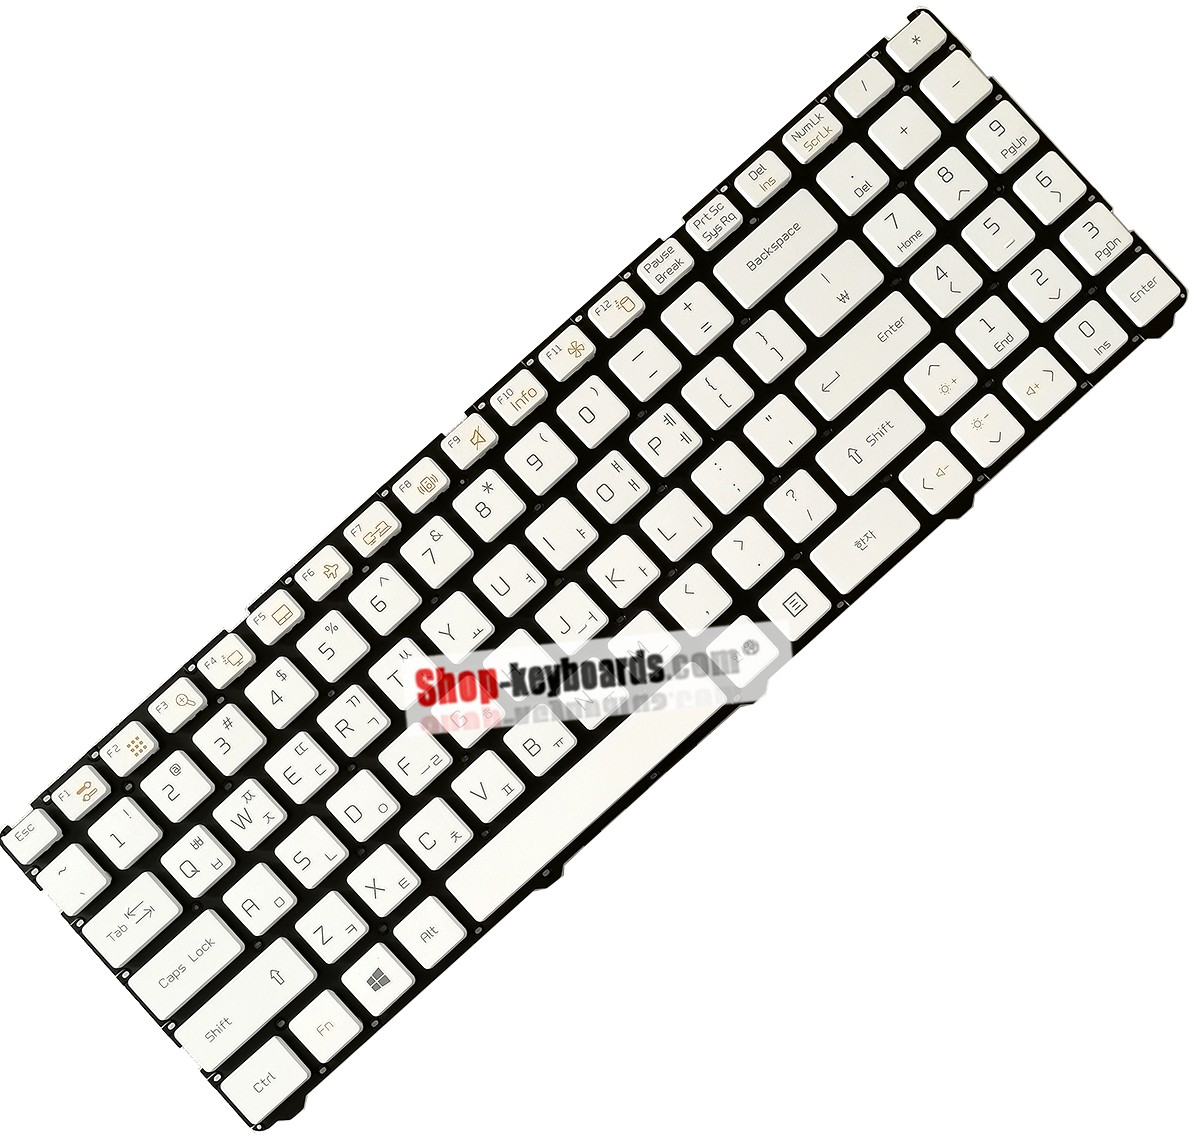 LG MP-12K73U4-9207 Keyboard replacement